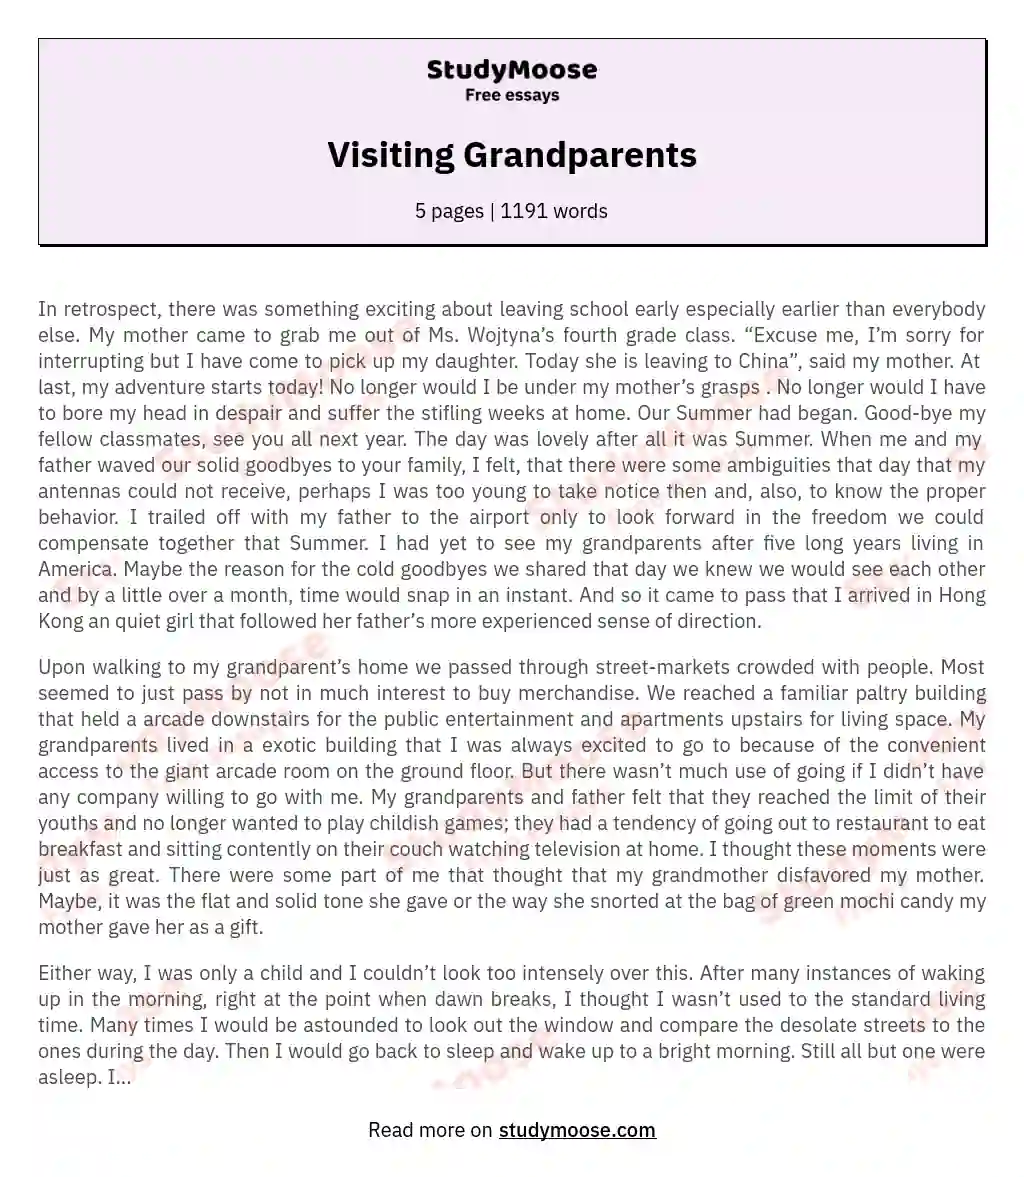 essay on visit to grandparents village